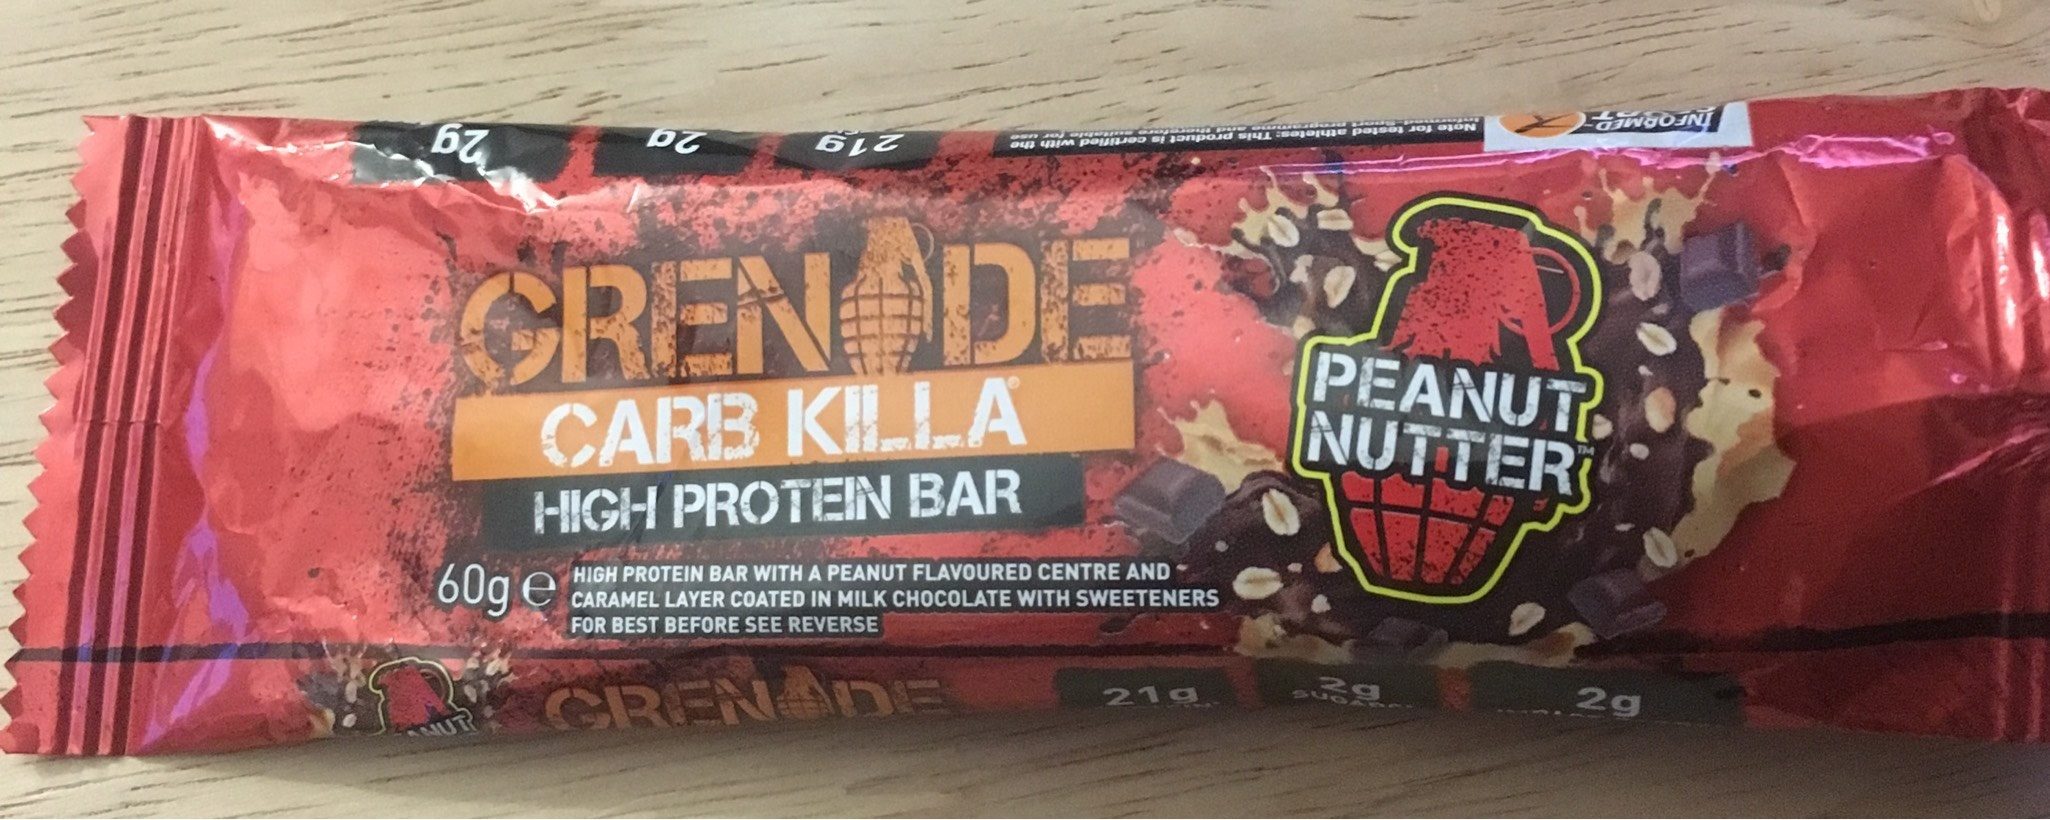 Carb Killa High Protein Bar Peanut Nutter - Product - fr